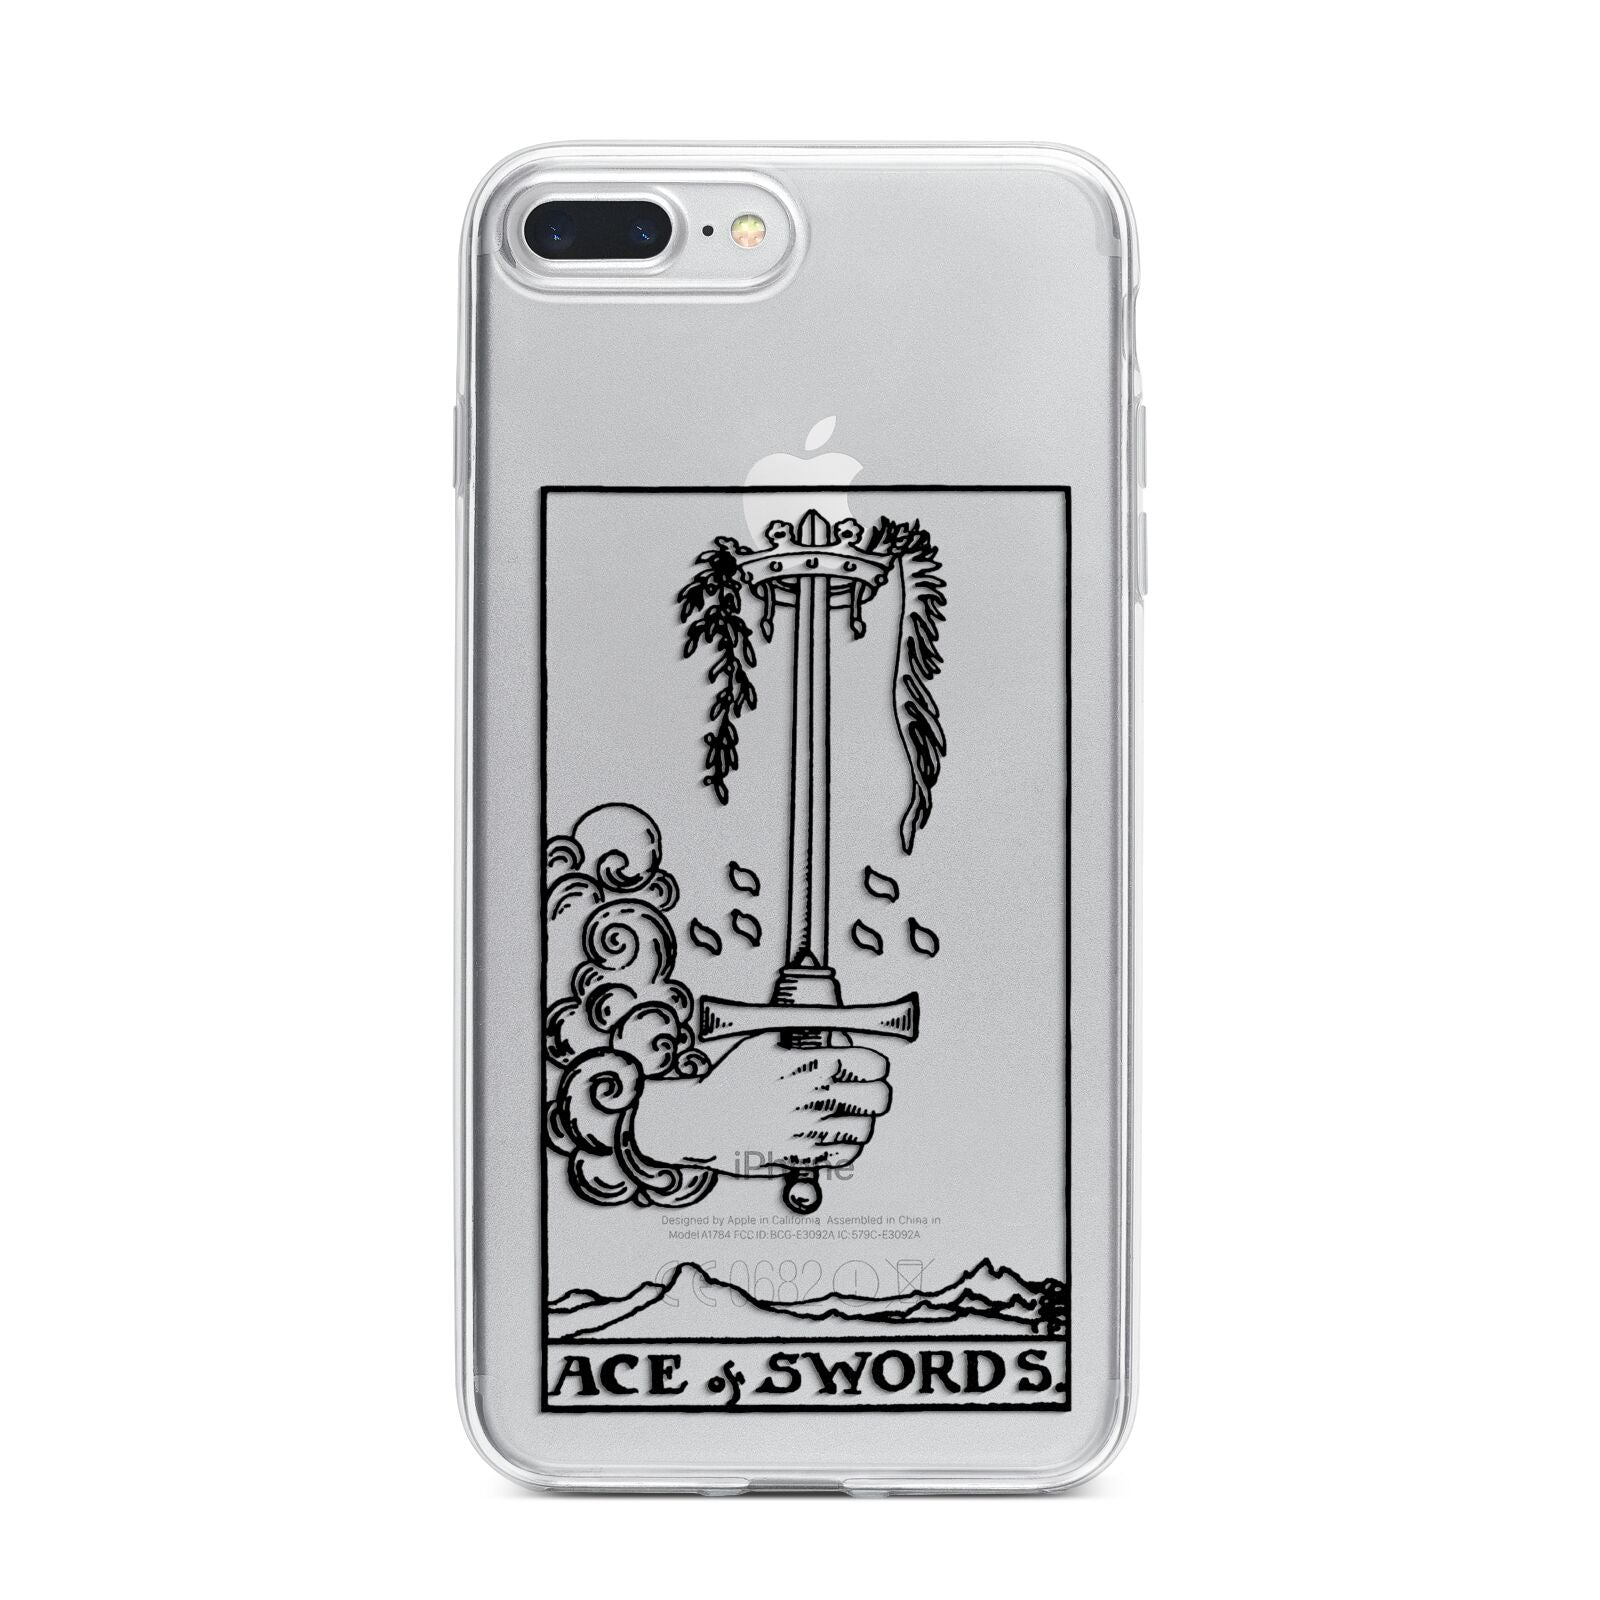 Ace of Swords Monochrome iPhone 7 Plus Bumper Case on Silver iPhone